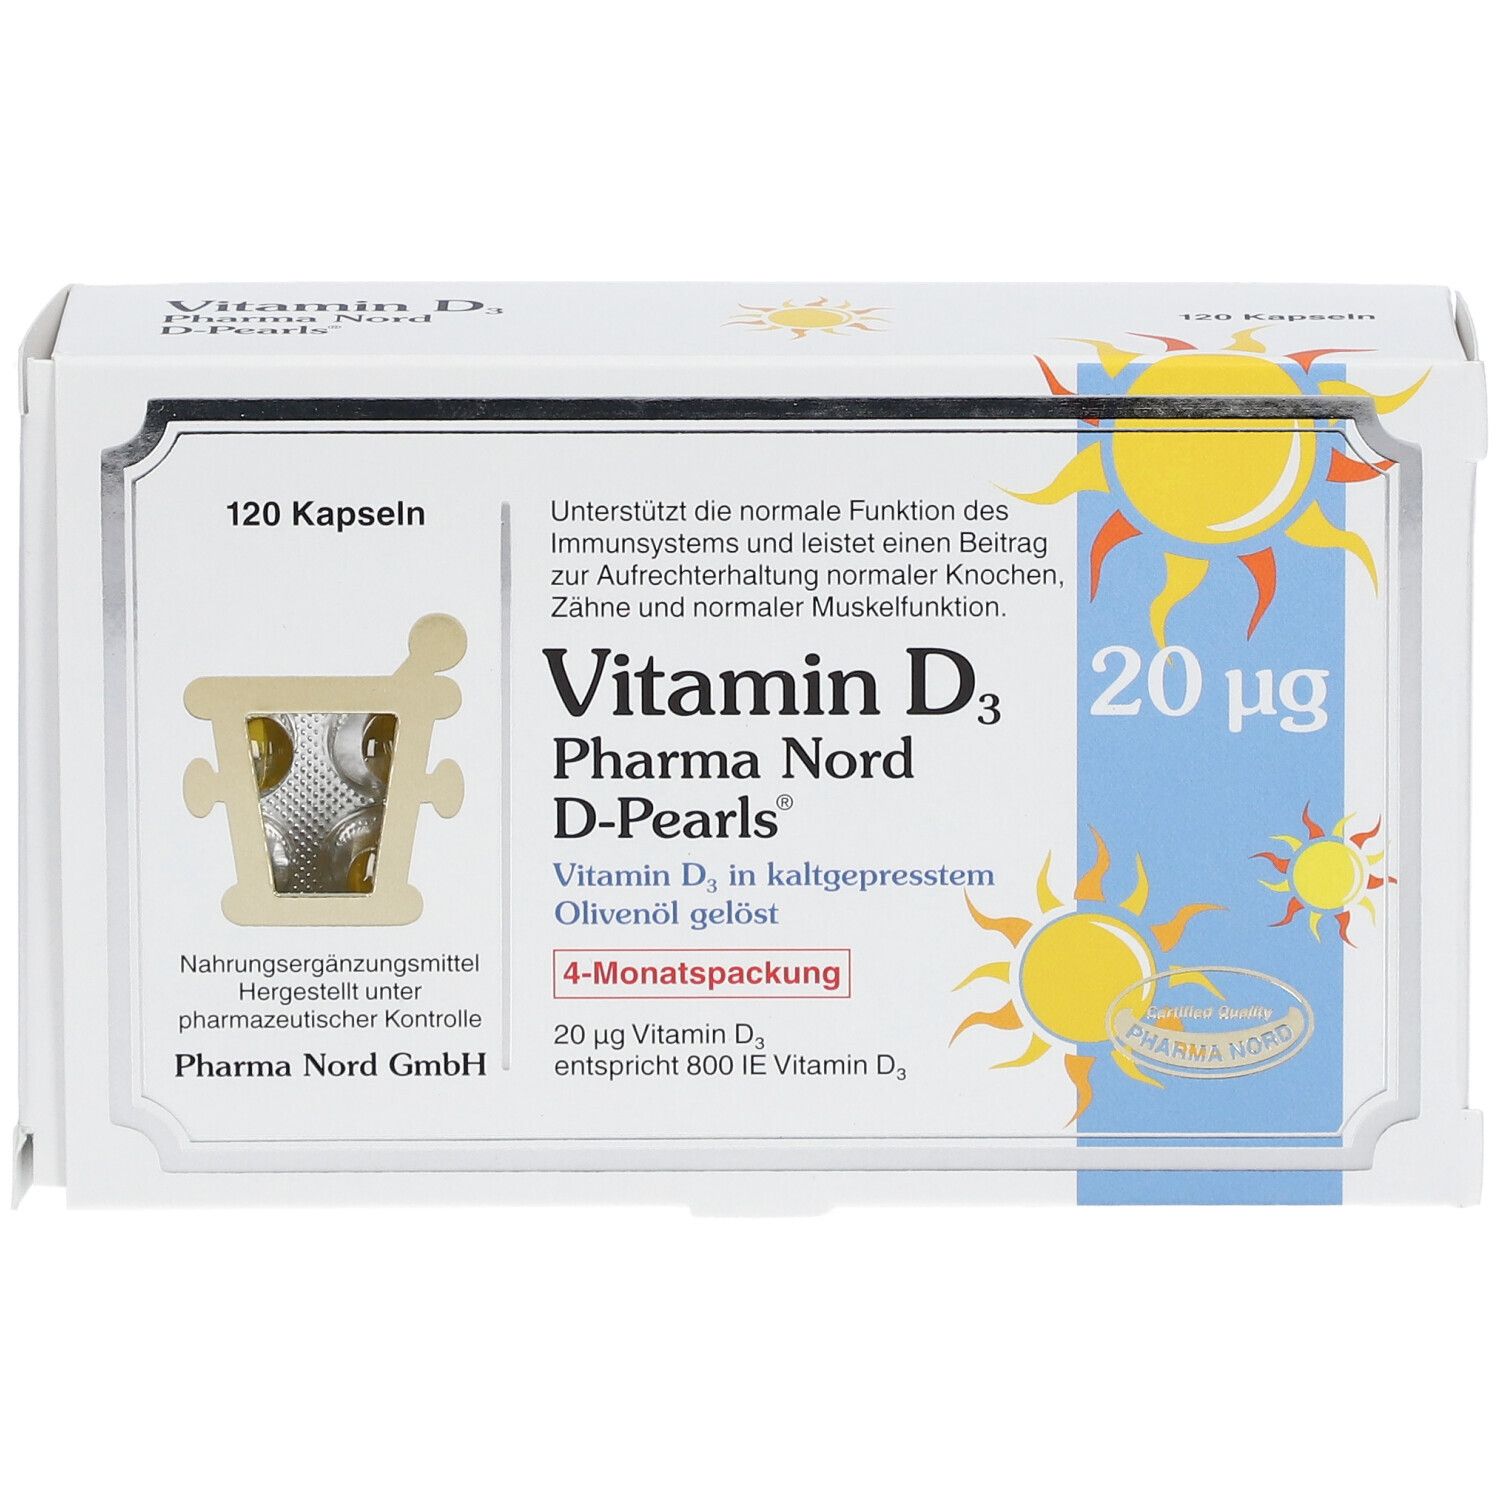 Vitamin D3 Pharma Nord D-Pearls®